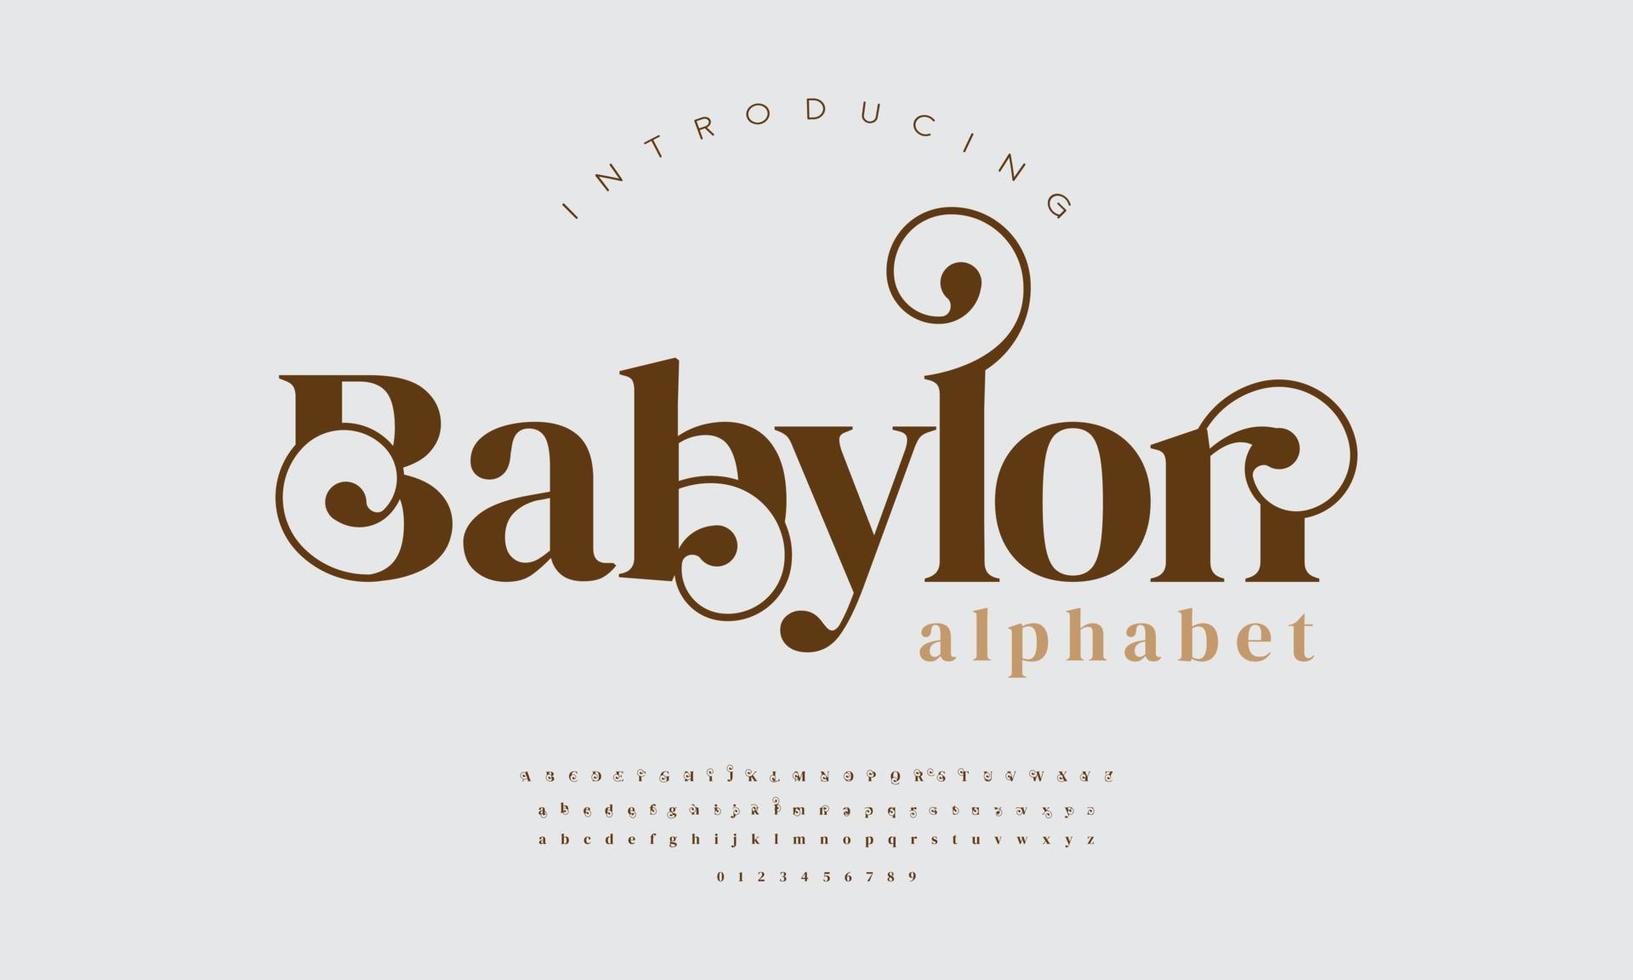 Babylon ashion font alphabet. Minimal modern urban fonts for logo, brand etc. Typography typeface uppercase lowercase and number. vector illustration